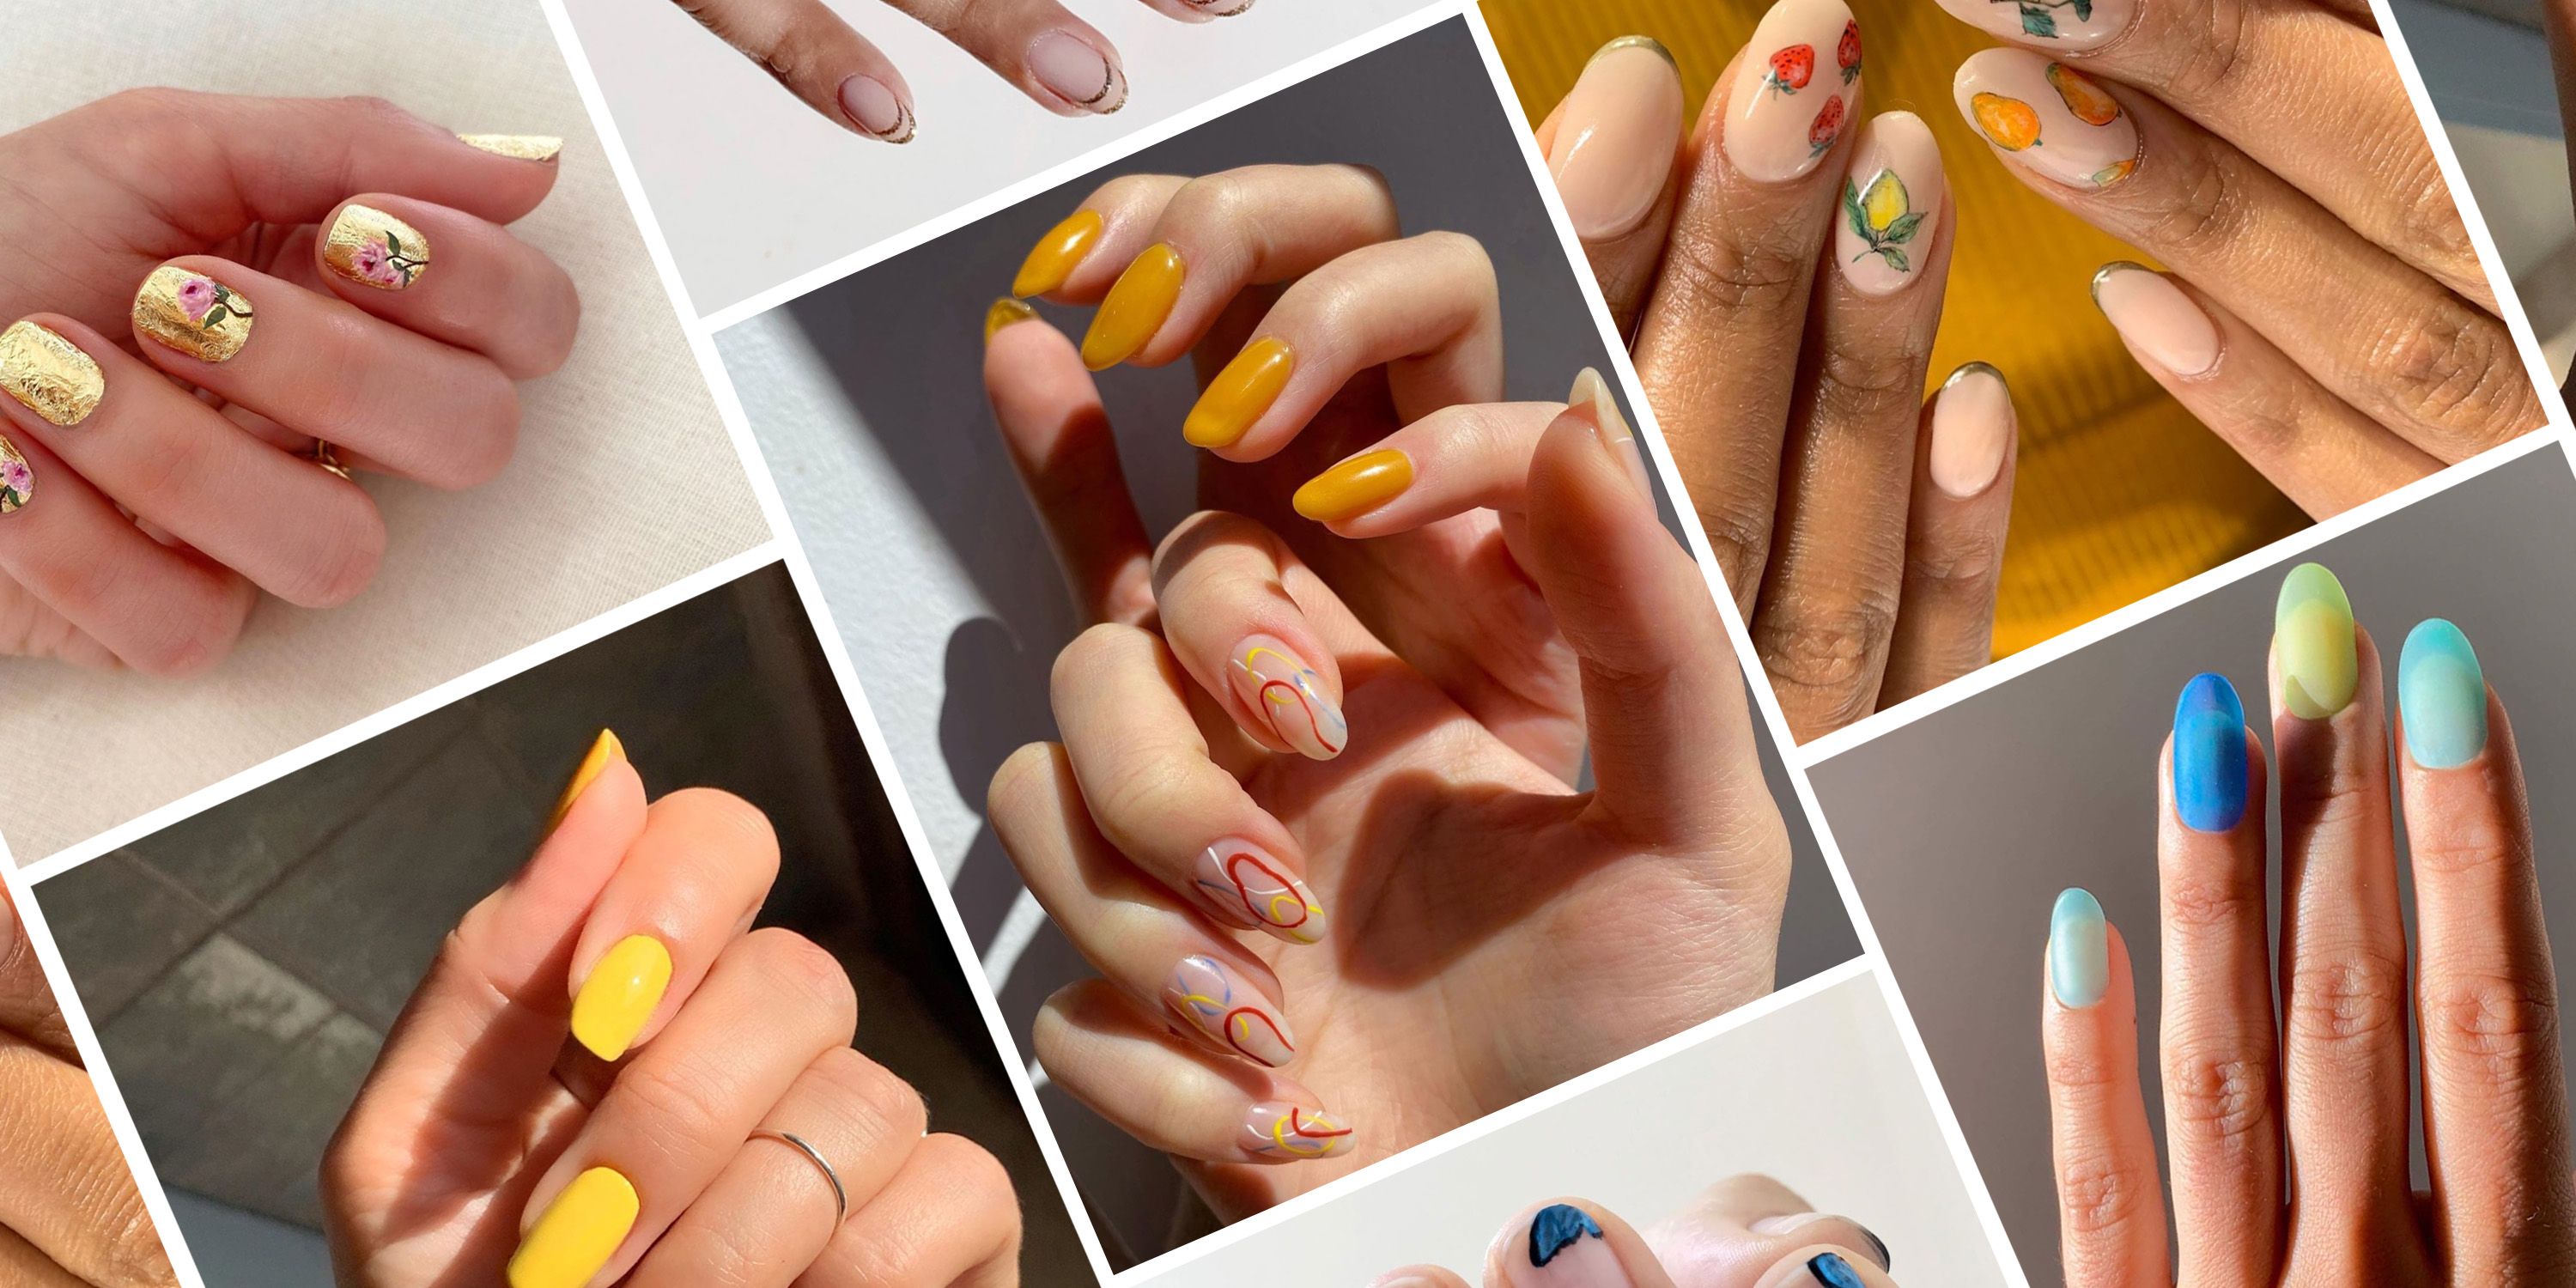 Pedicure Toe Nail Colors Summer 2020 - pic-nation